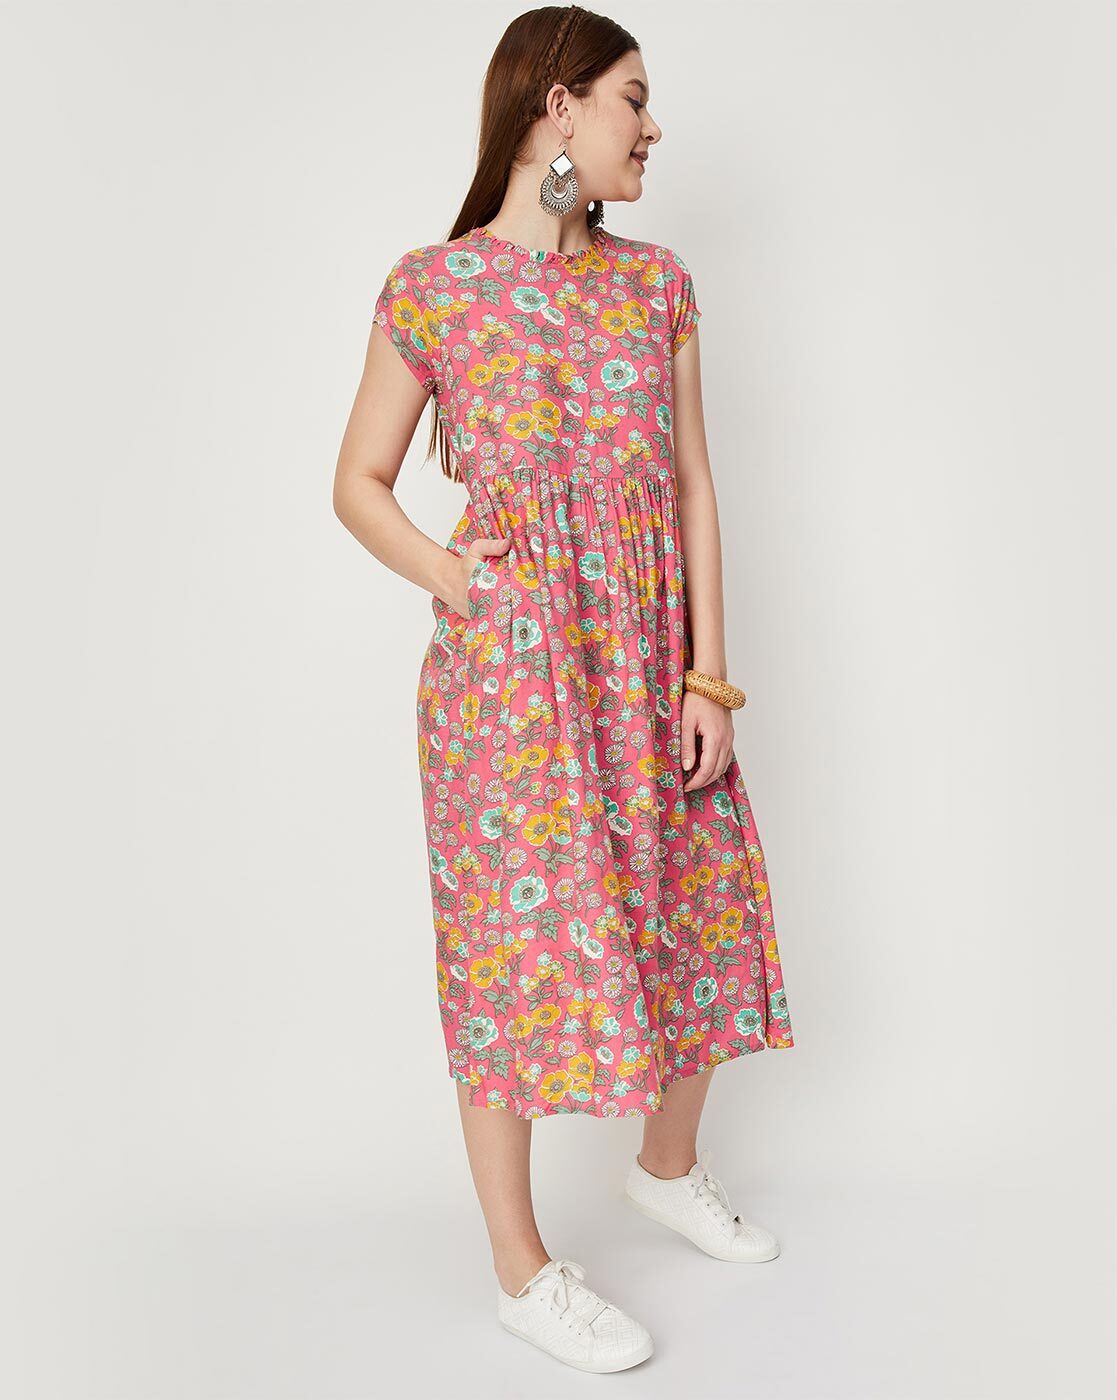 One Shoulder Embroidered Floral A Line Dress – Mac Duggal